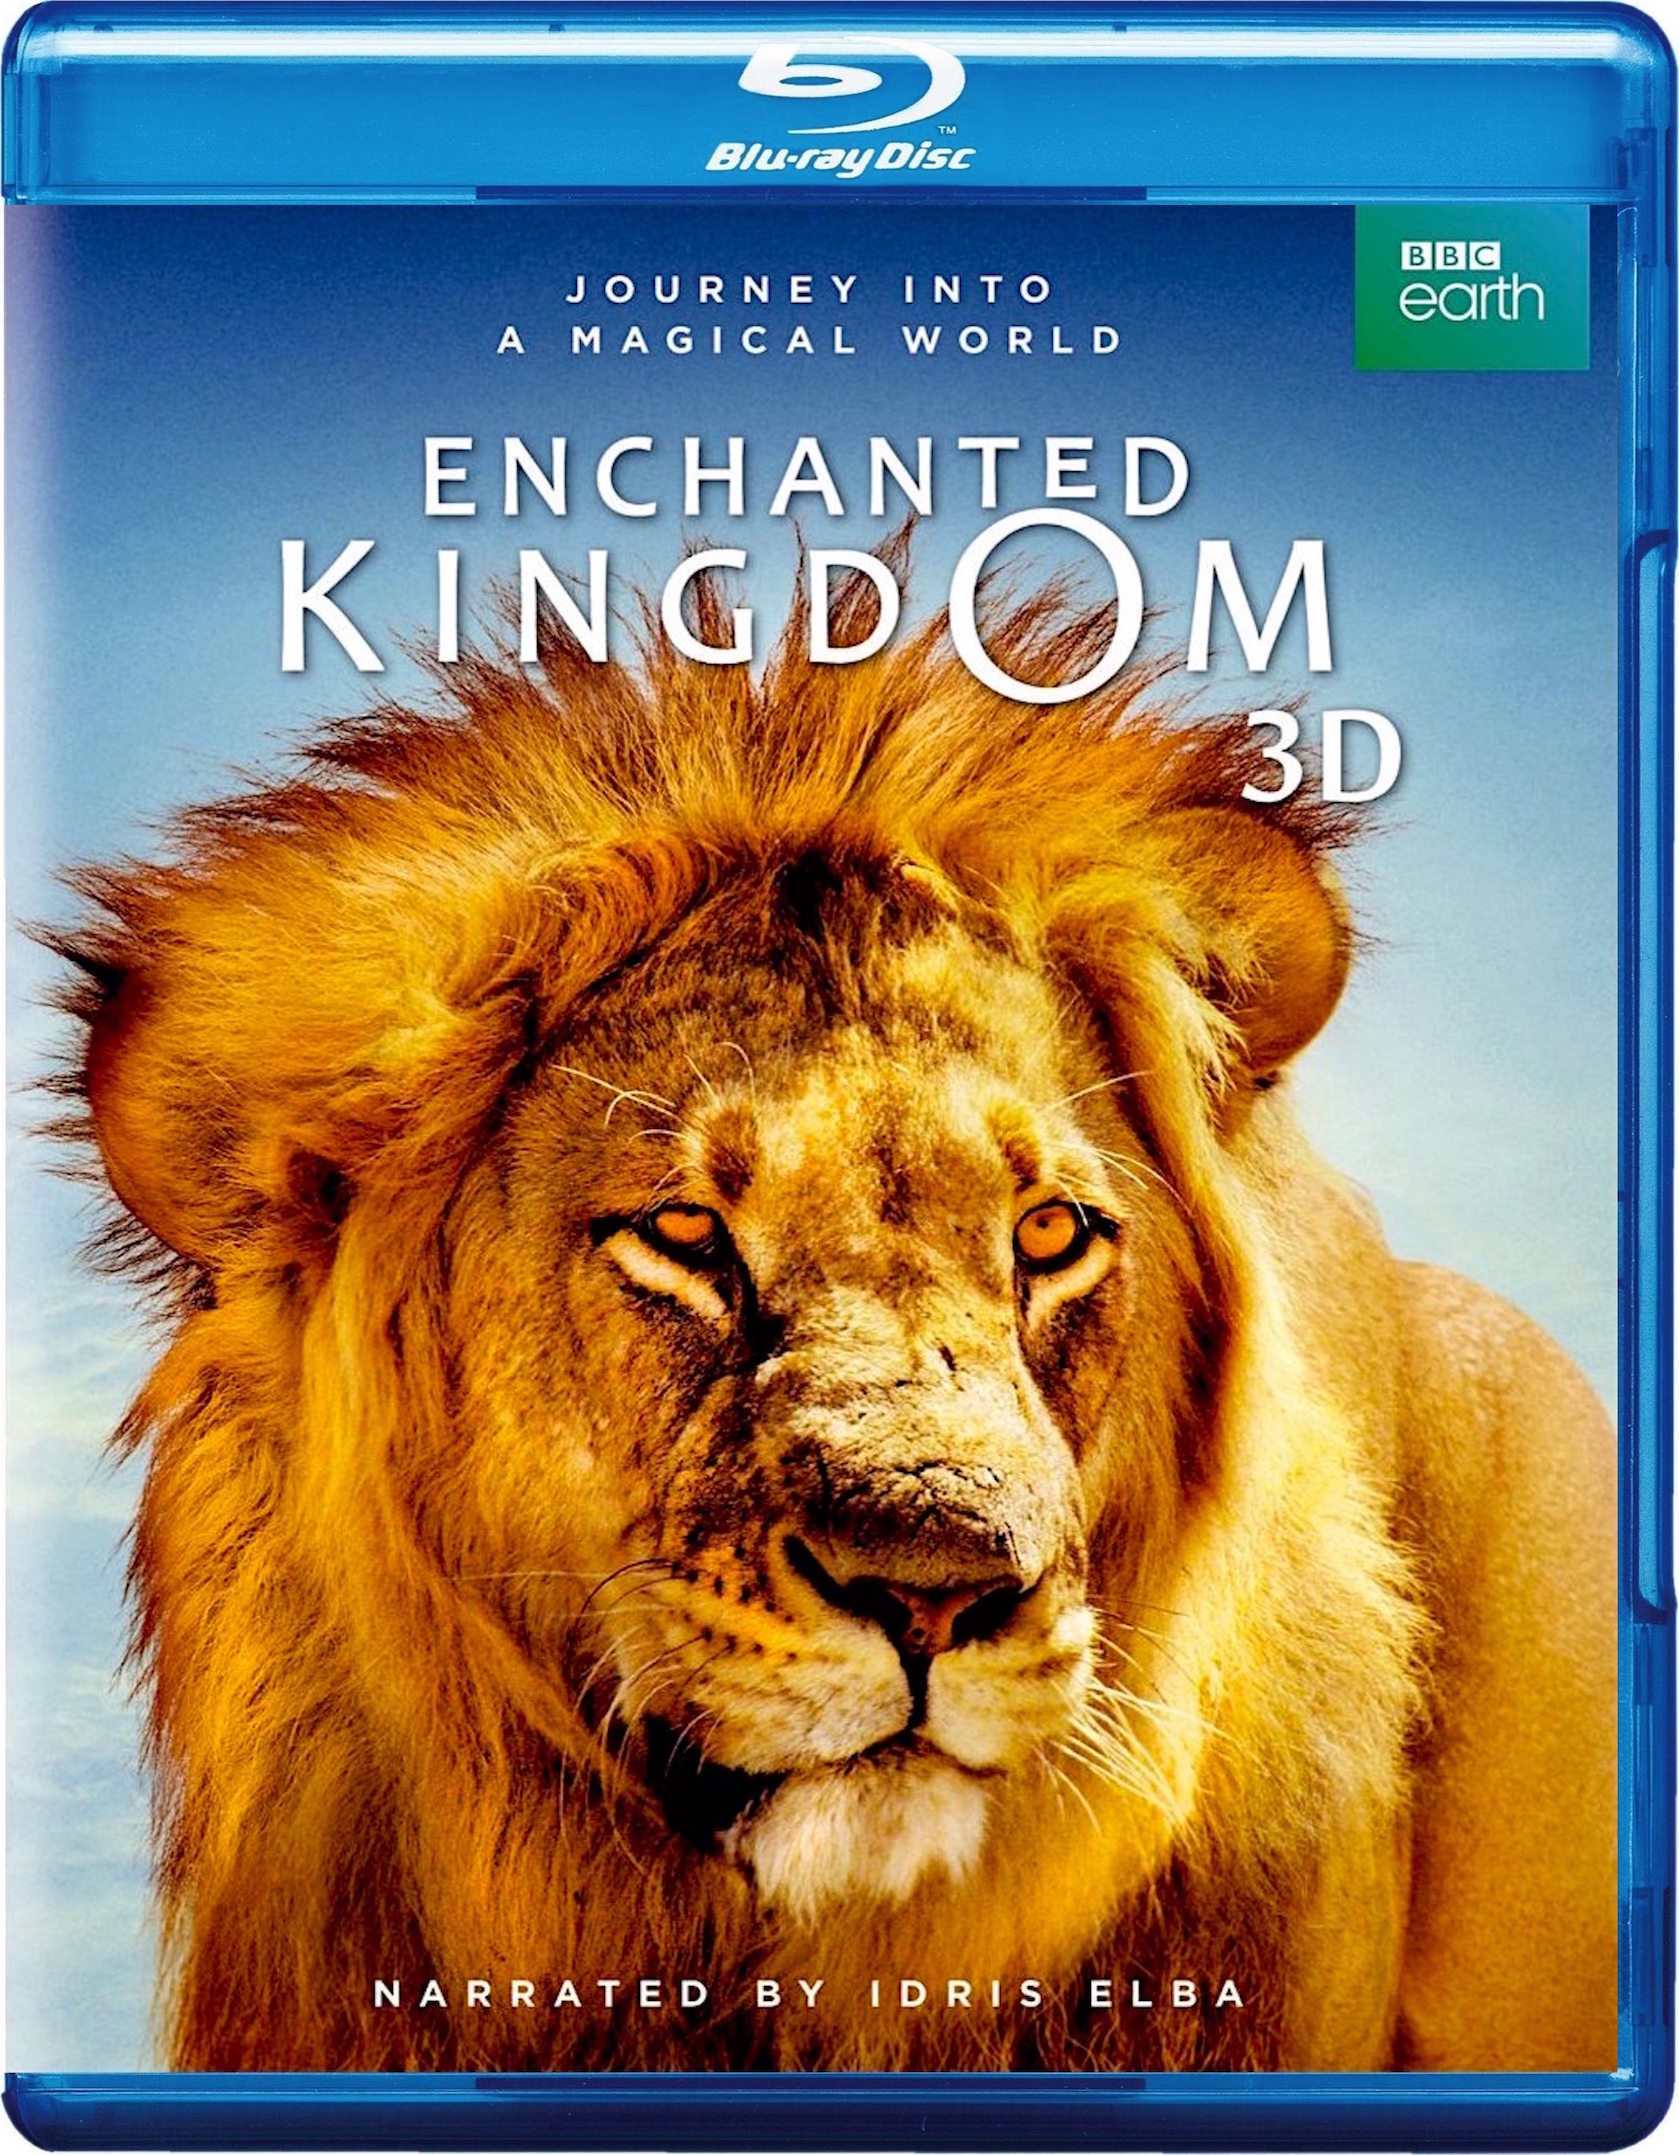 Enchanted Kingdom 3D Blu-ray